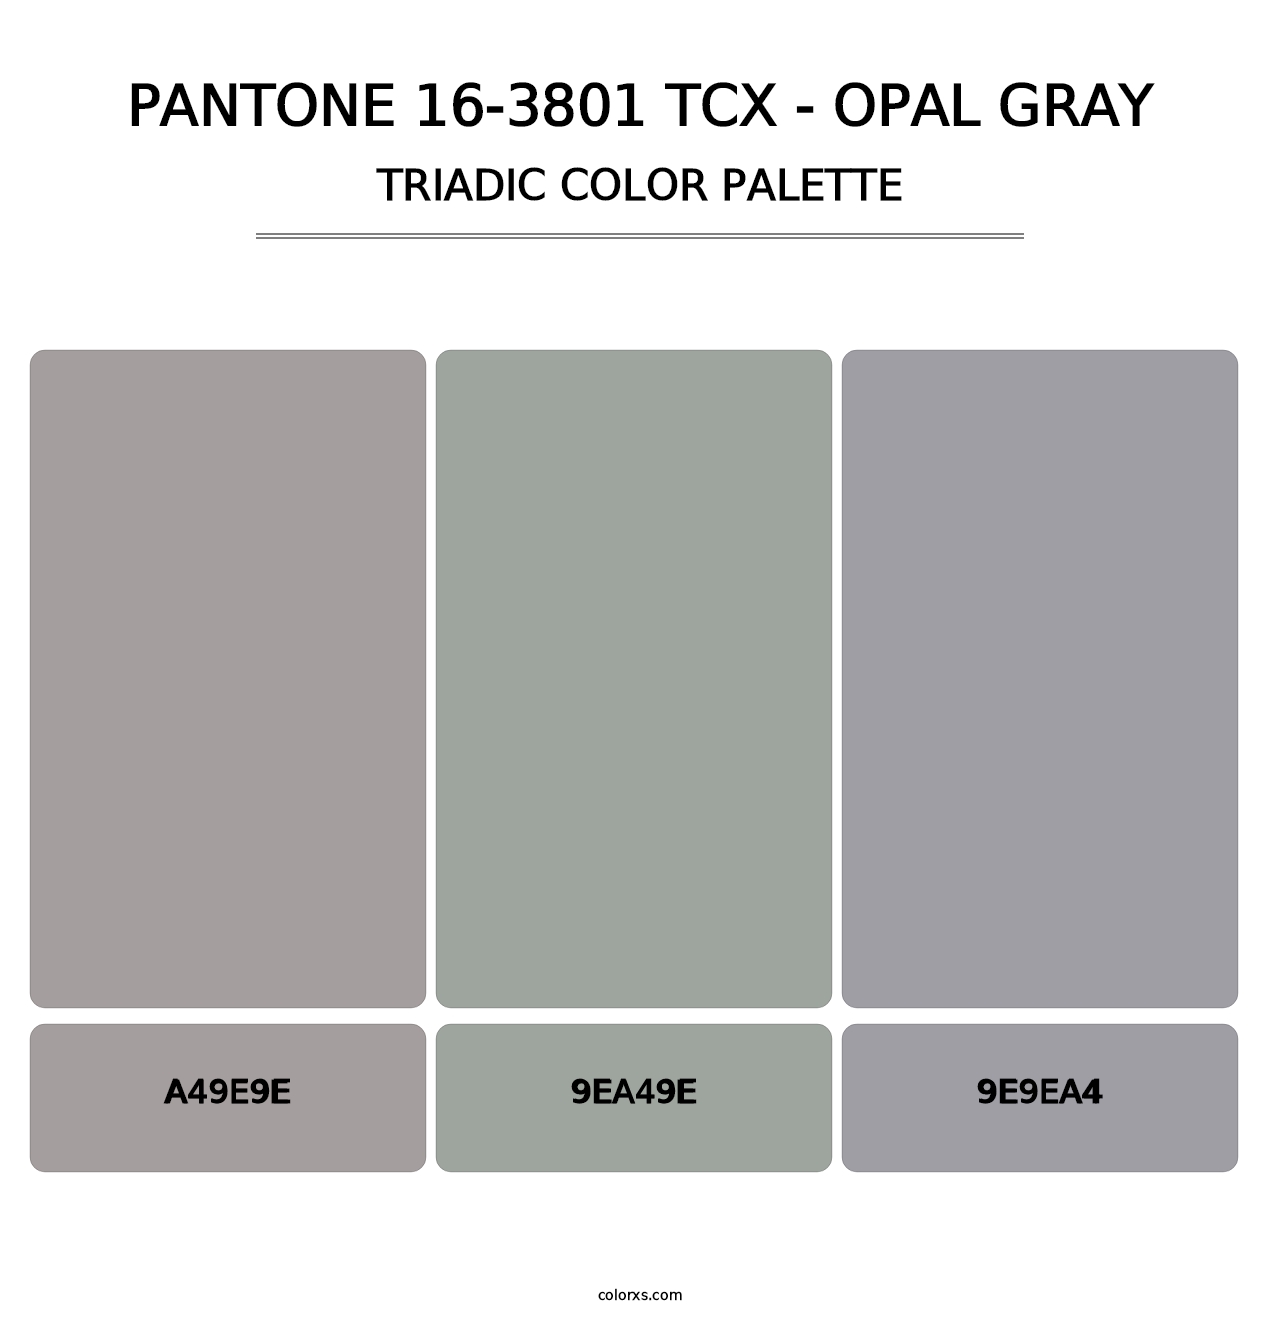 PANTONE 16-3801 TCX - Opal Gray - Triadic Color Palette